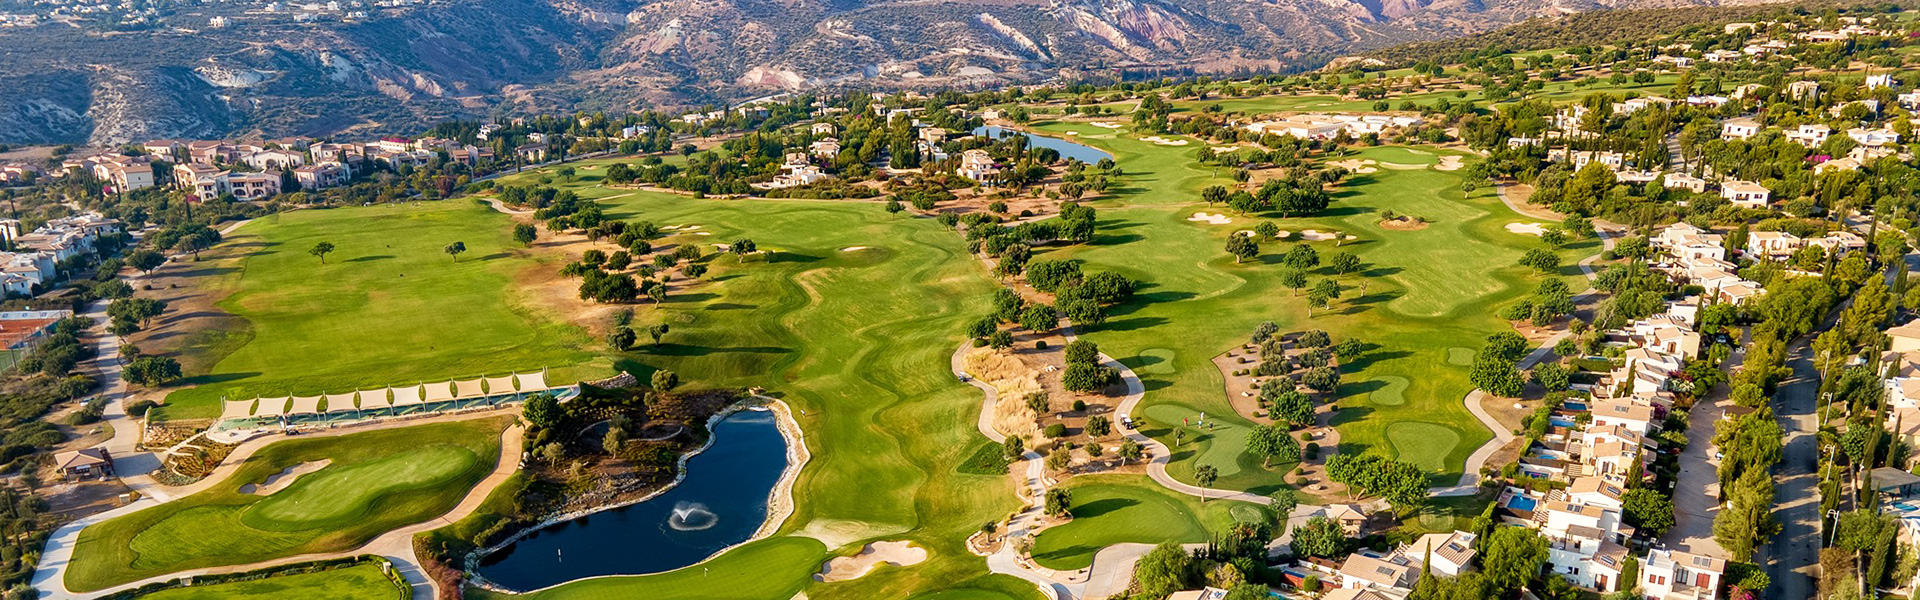 Bilyana Golf - The PGA National Aphrodite Hills Golf Course